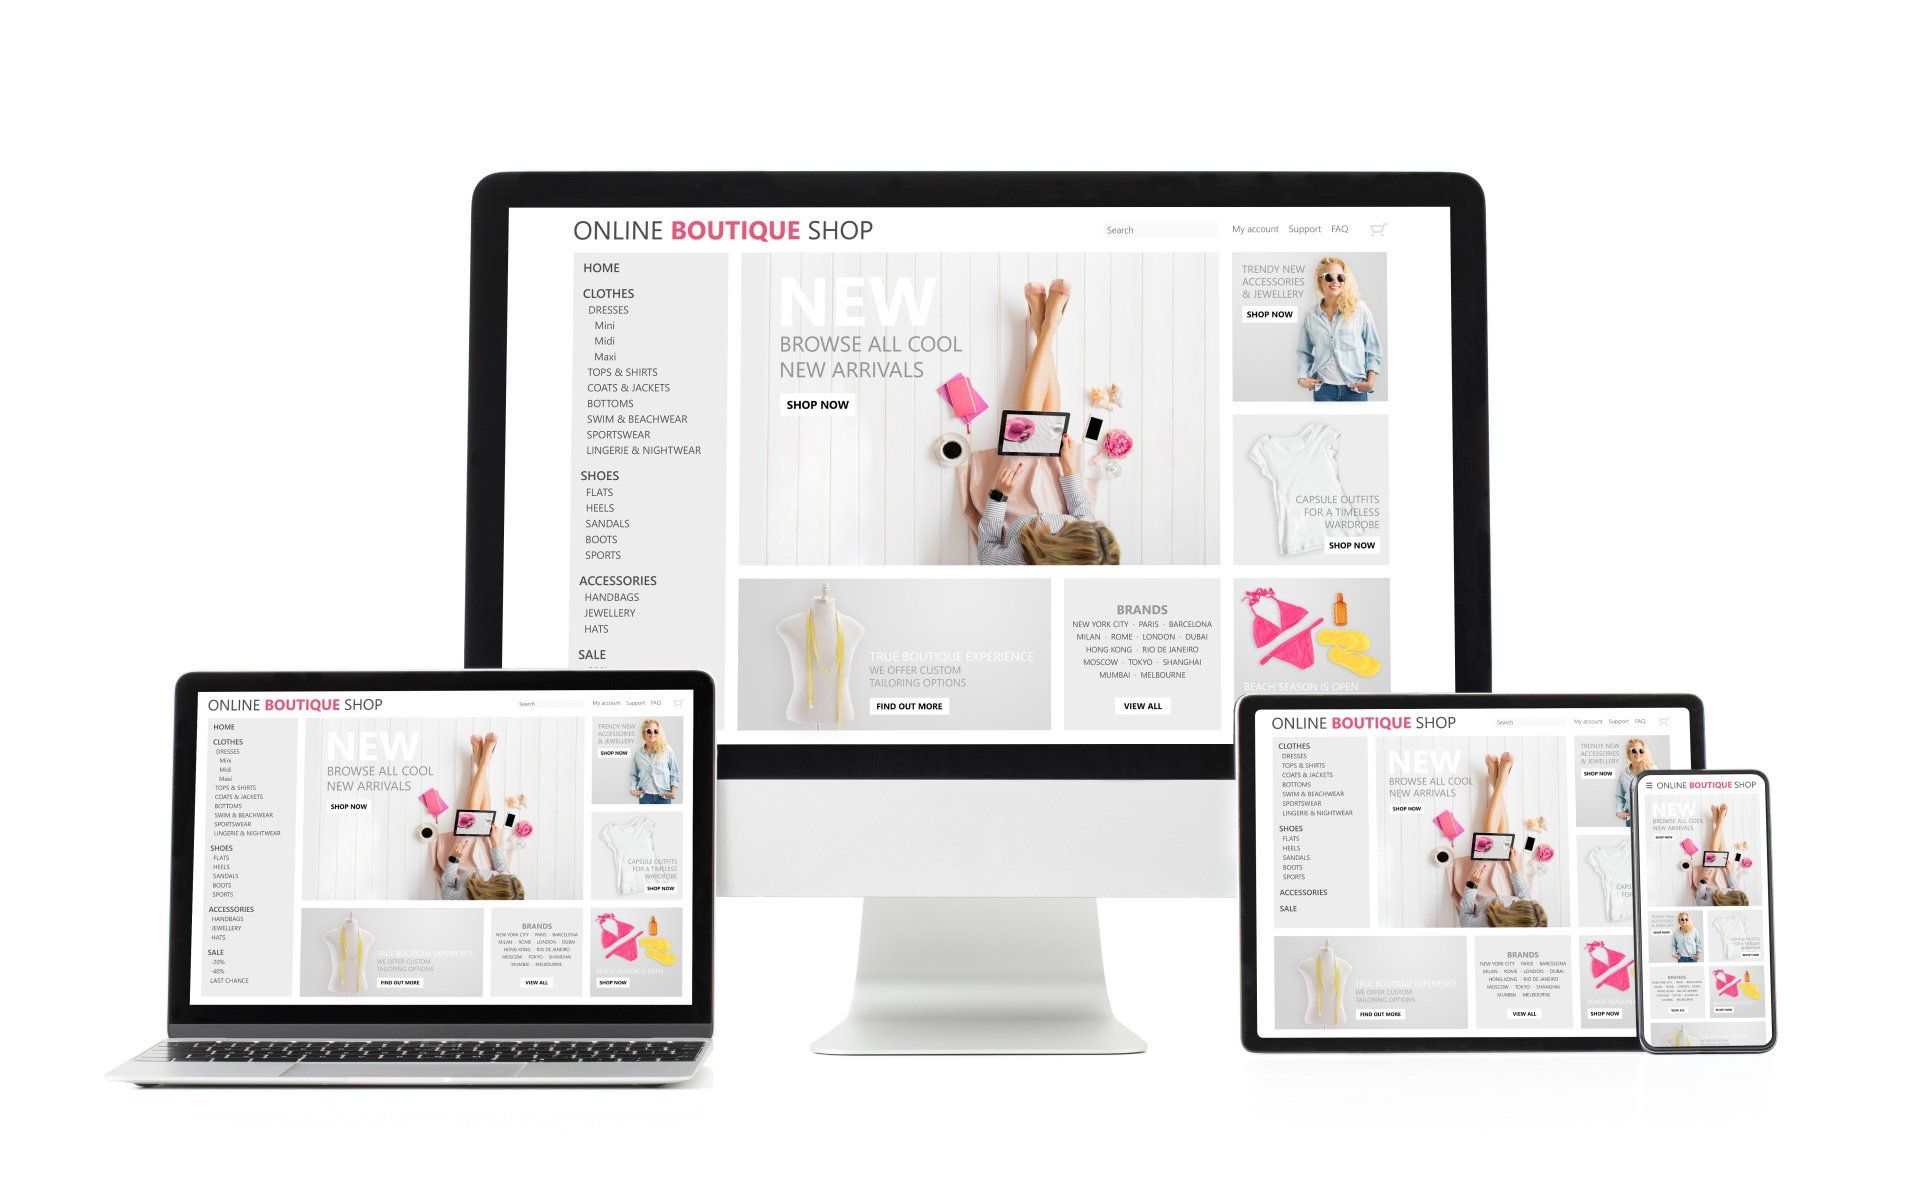 Online boutique shop website open on desktop, laptop, tablet and smartphone